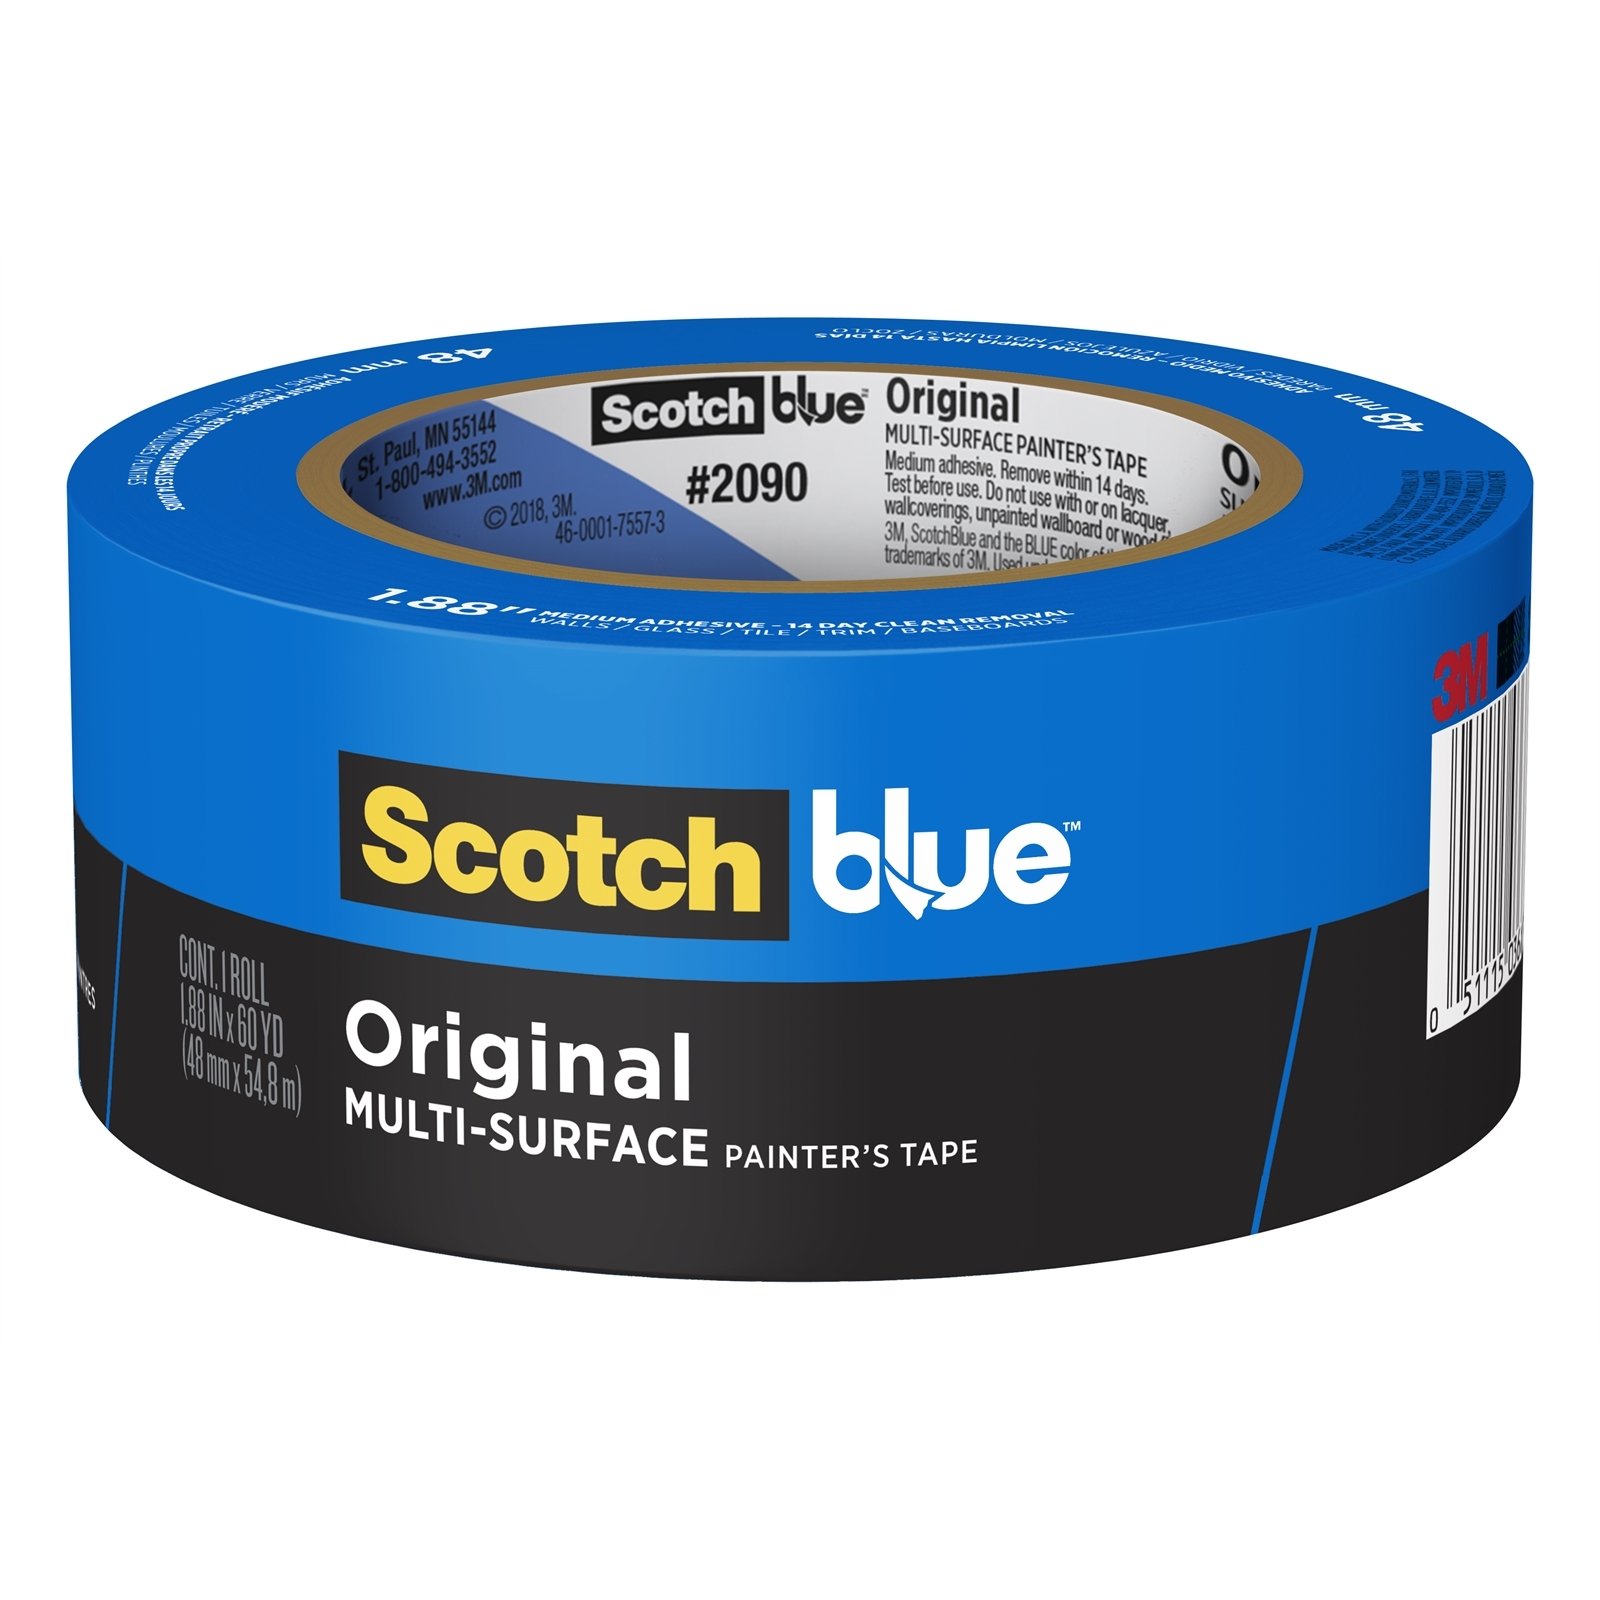 ScotchBlue 48mm x 55m Original Multi-Surface Painter's Masking Tape - Bunnings